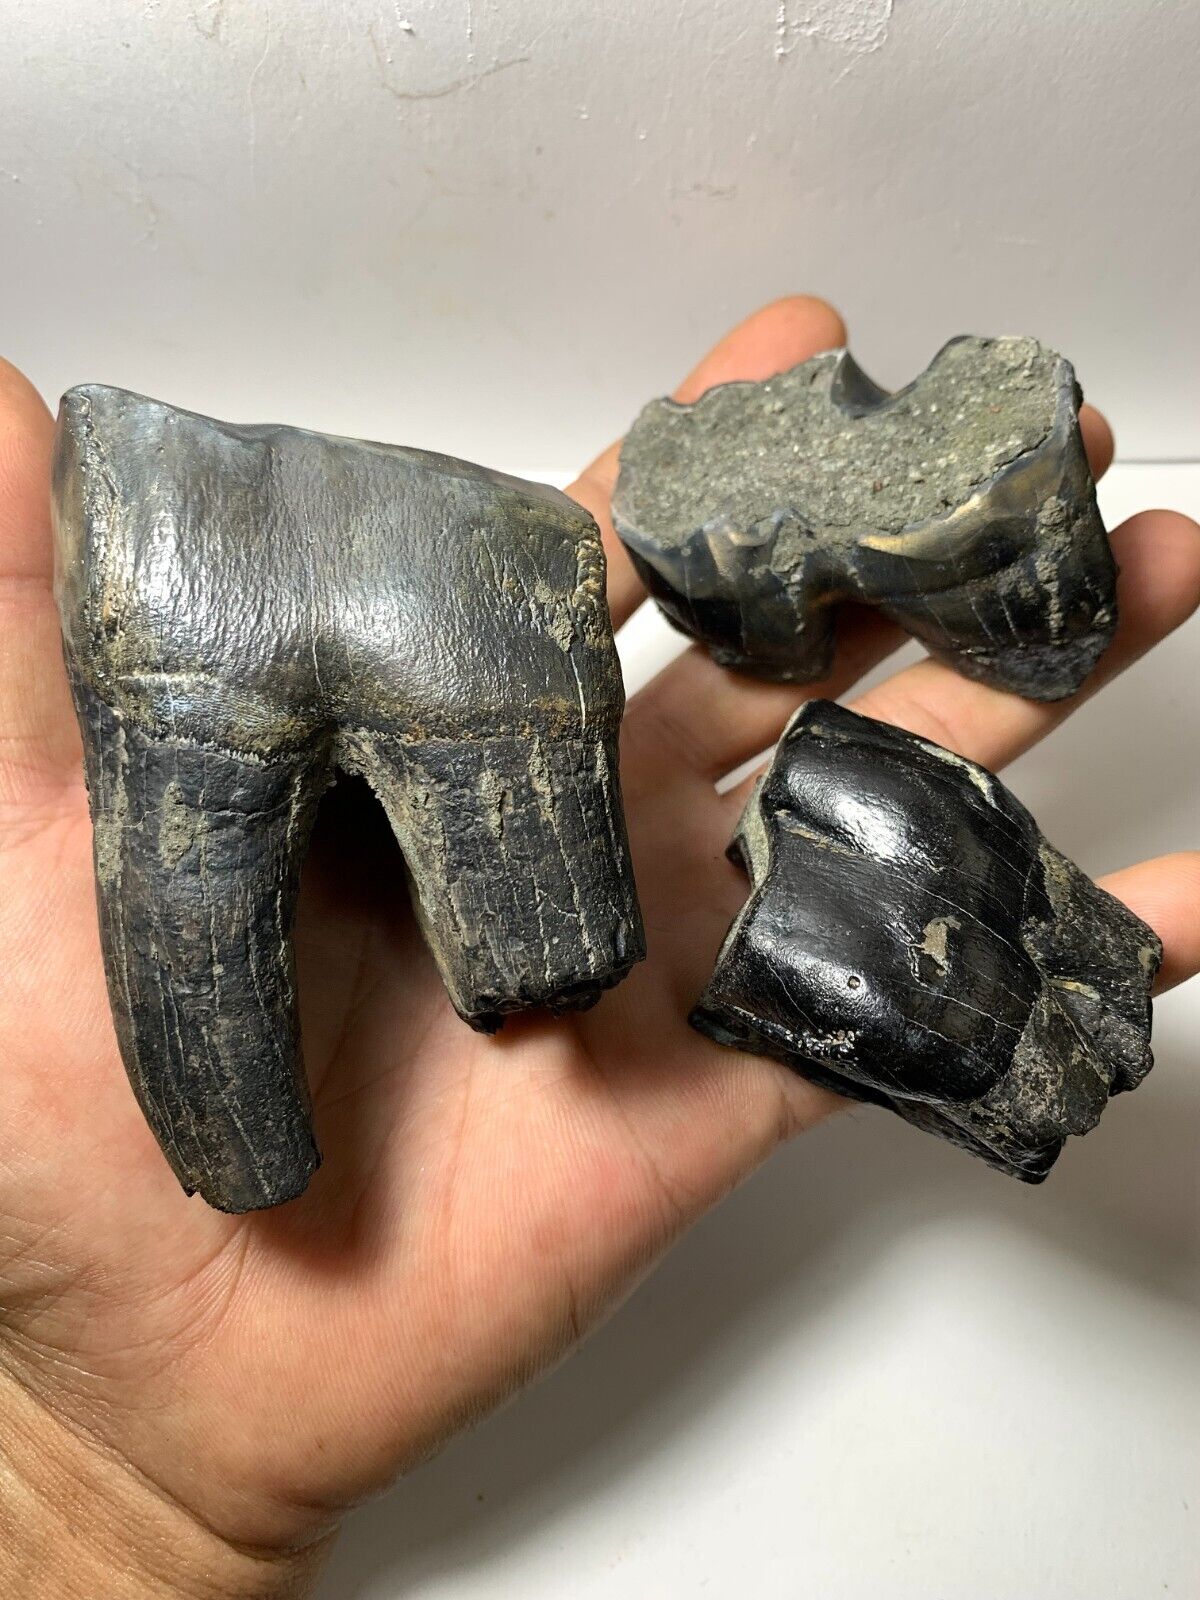 3 pcs. Aceratherium Rhinoceros Fossil Tooth - Very Beautiful Amazing Genuine